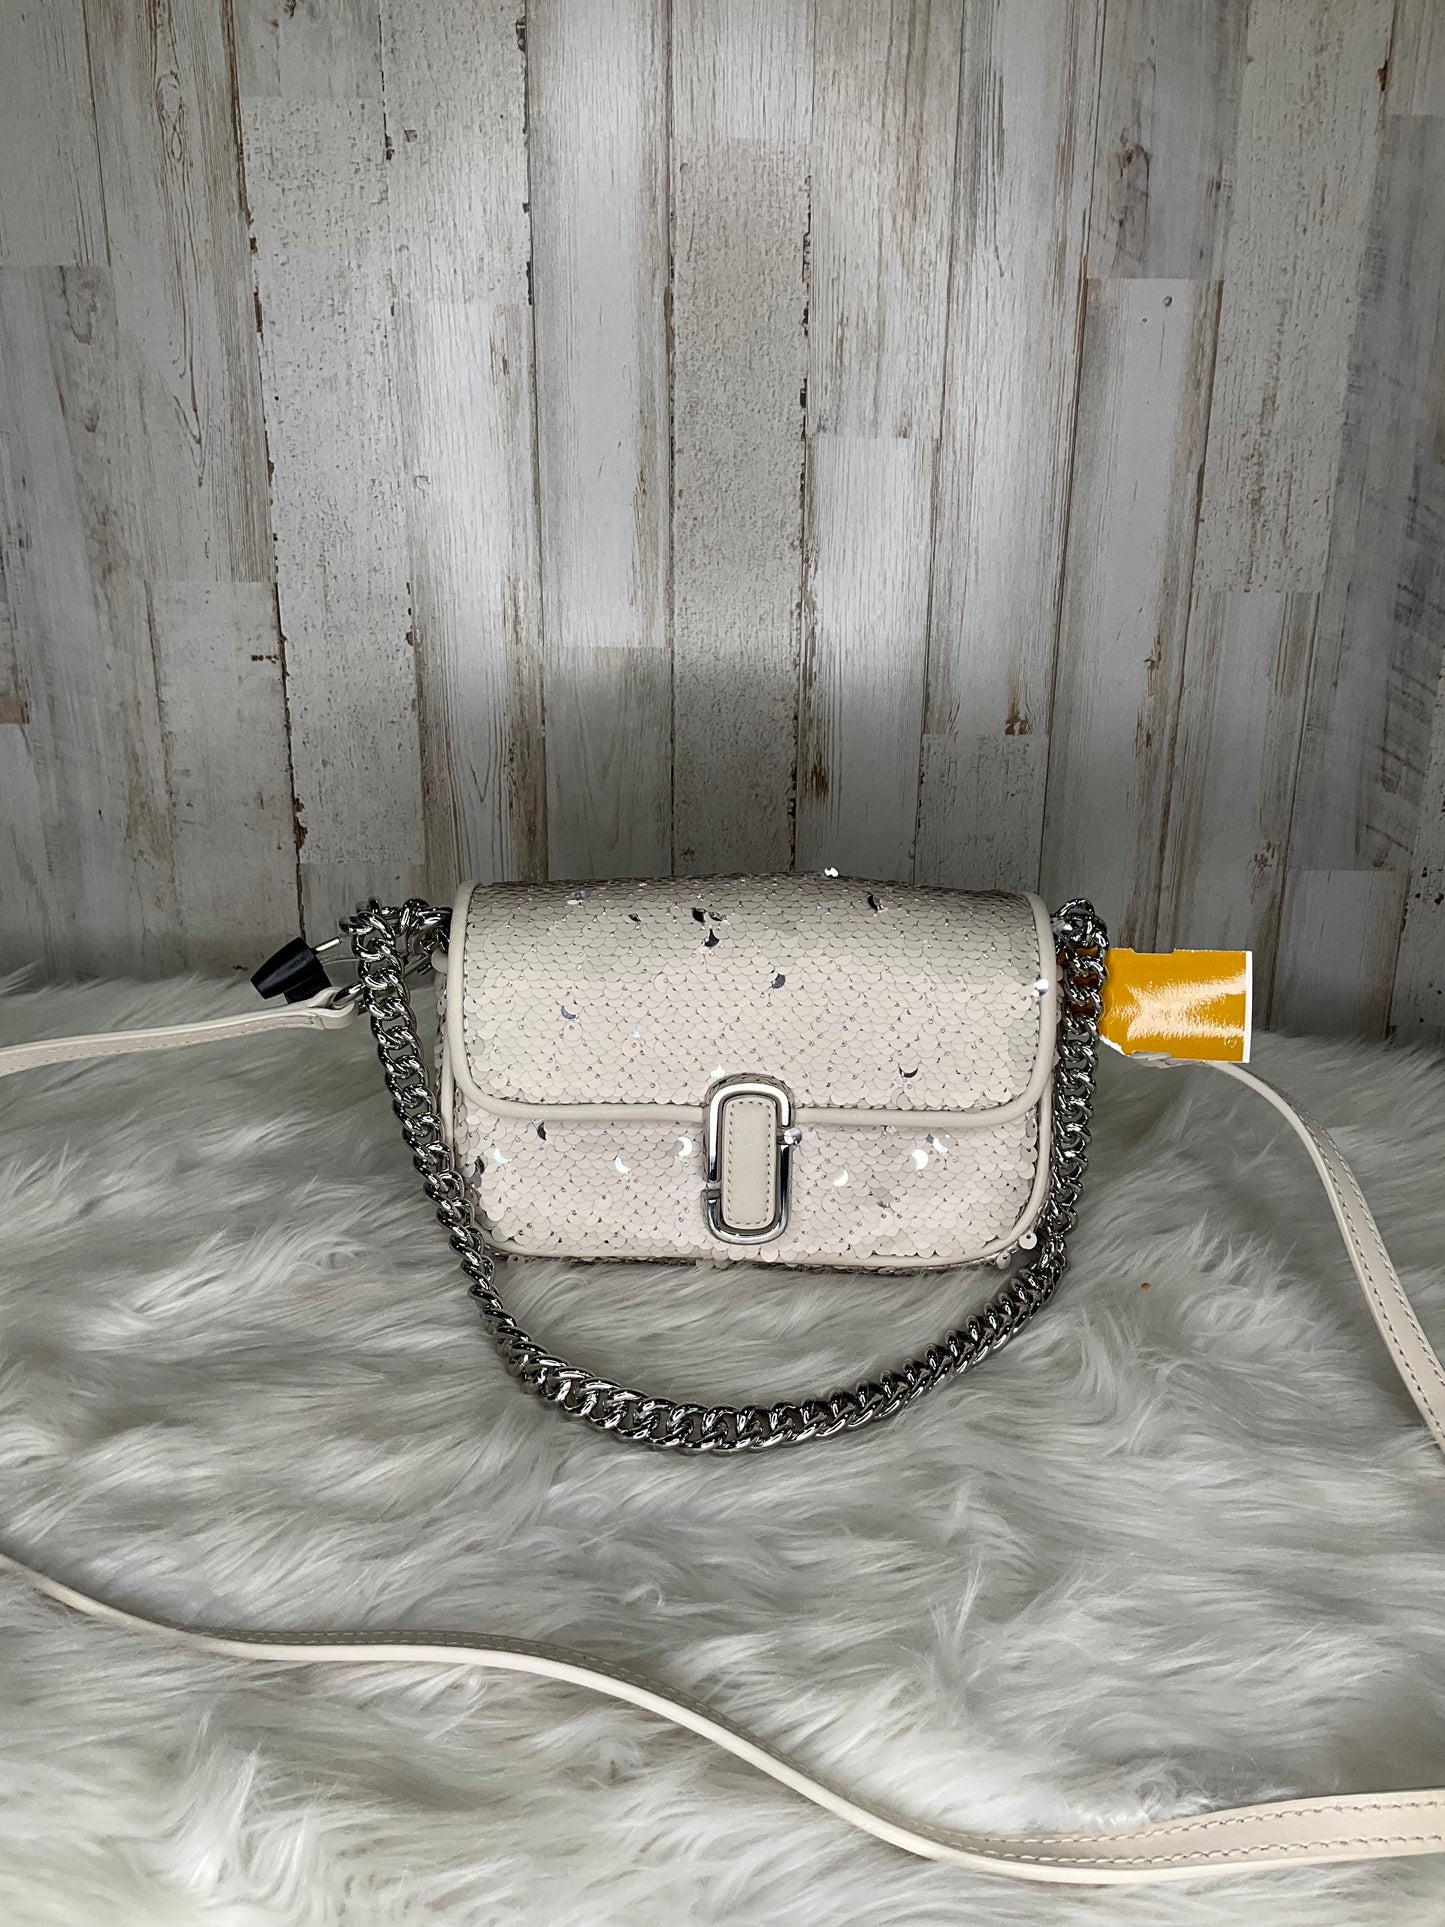 Handbag Designer By Marc Jacobs  Size: Small